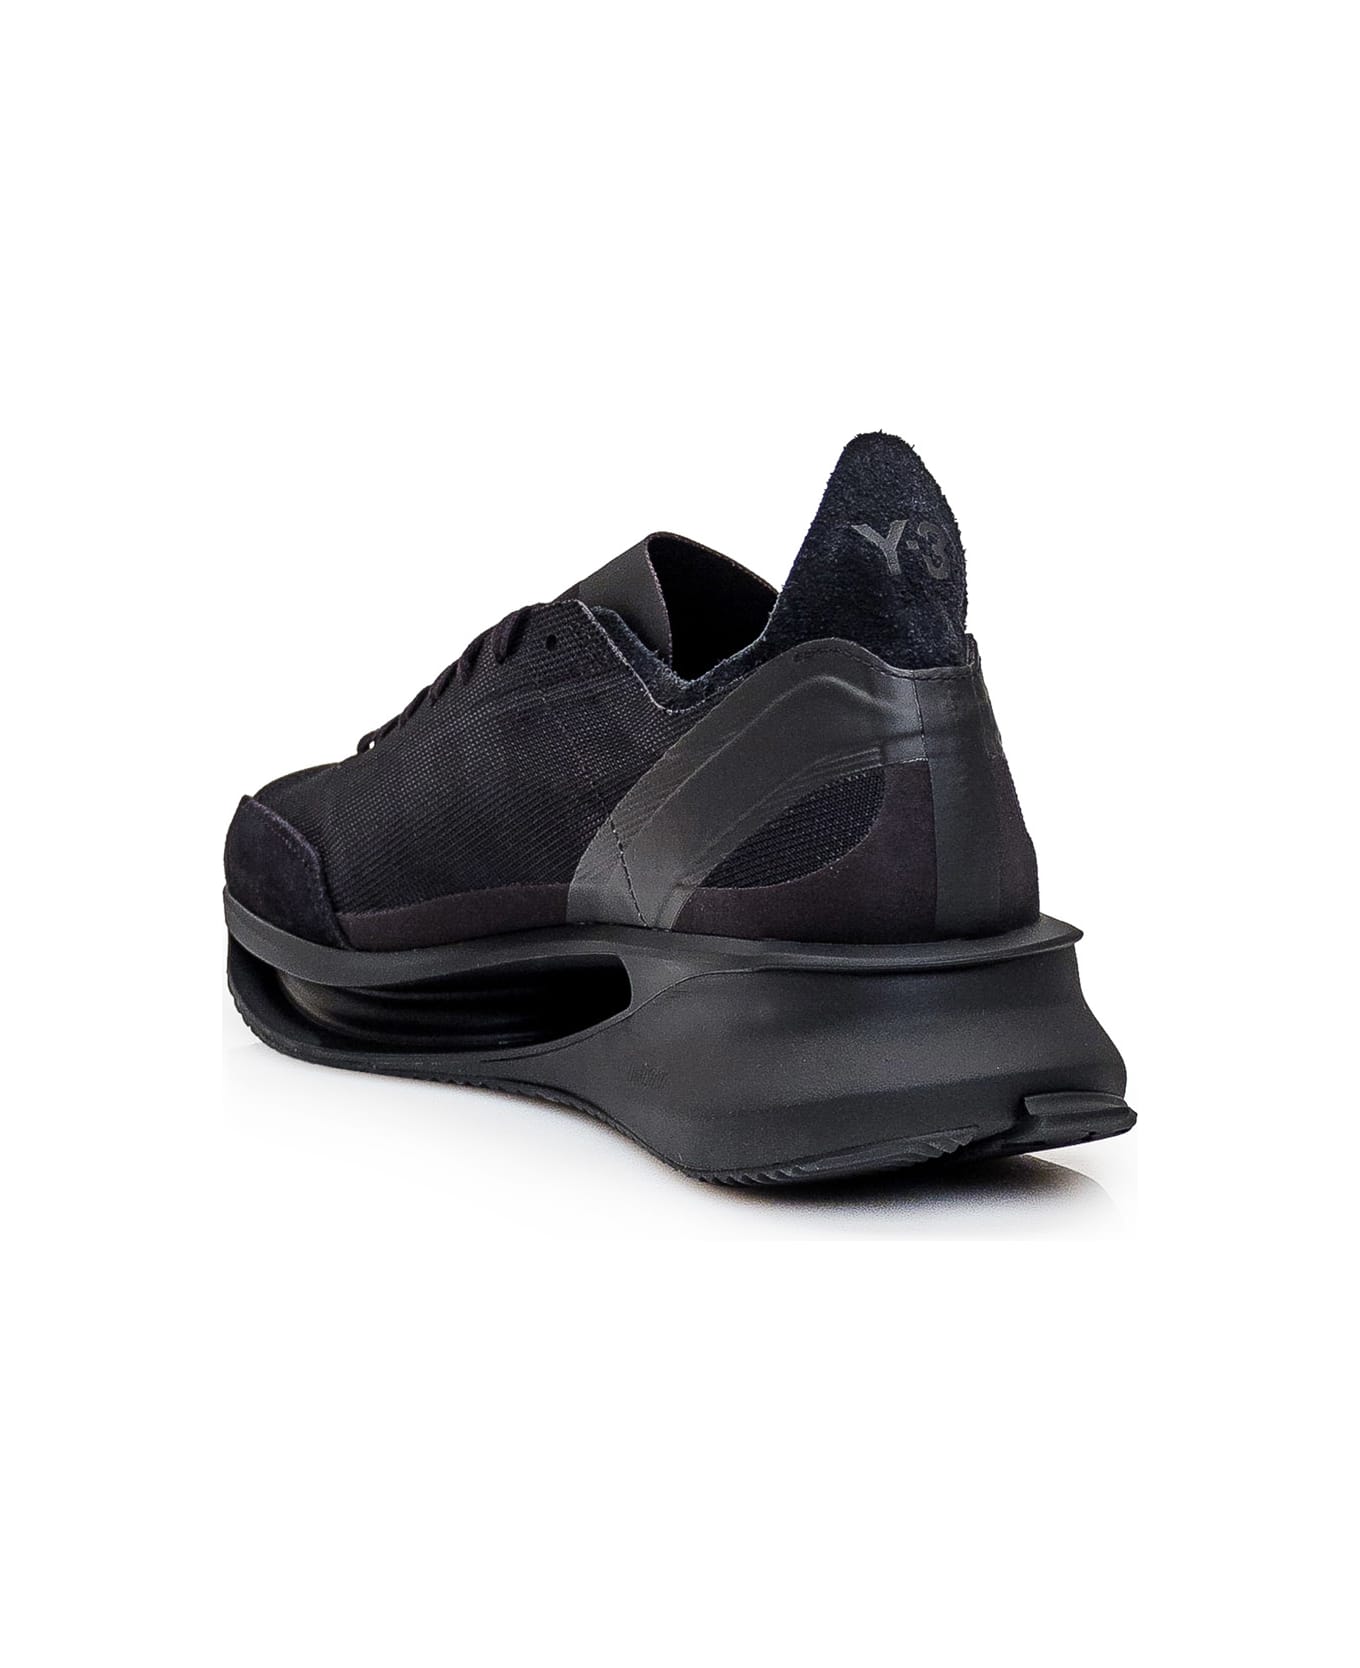 Y-3 Gendo Run Sneaker - BLACK/BLACK/BLACK